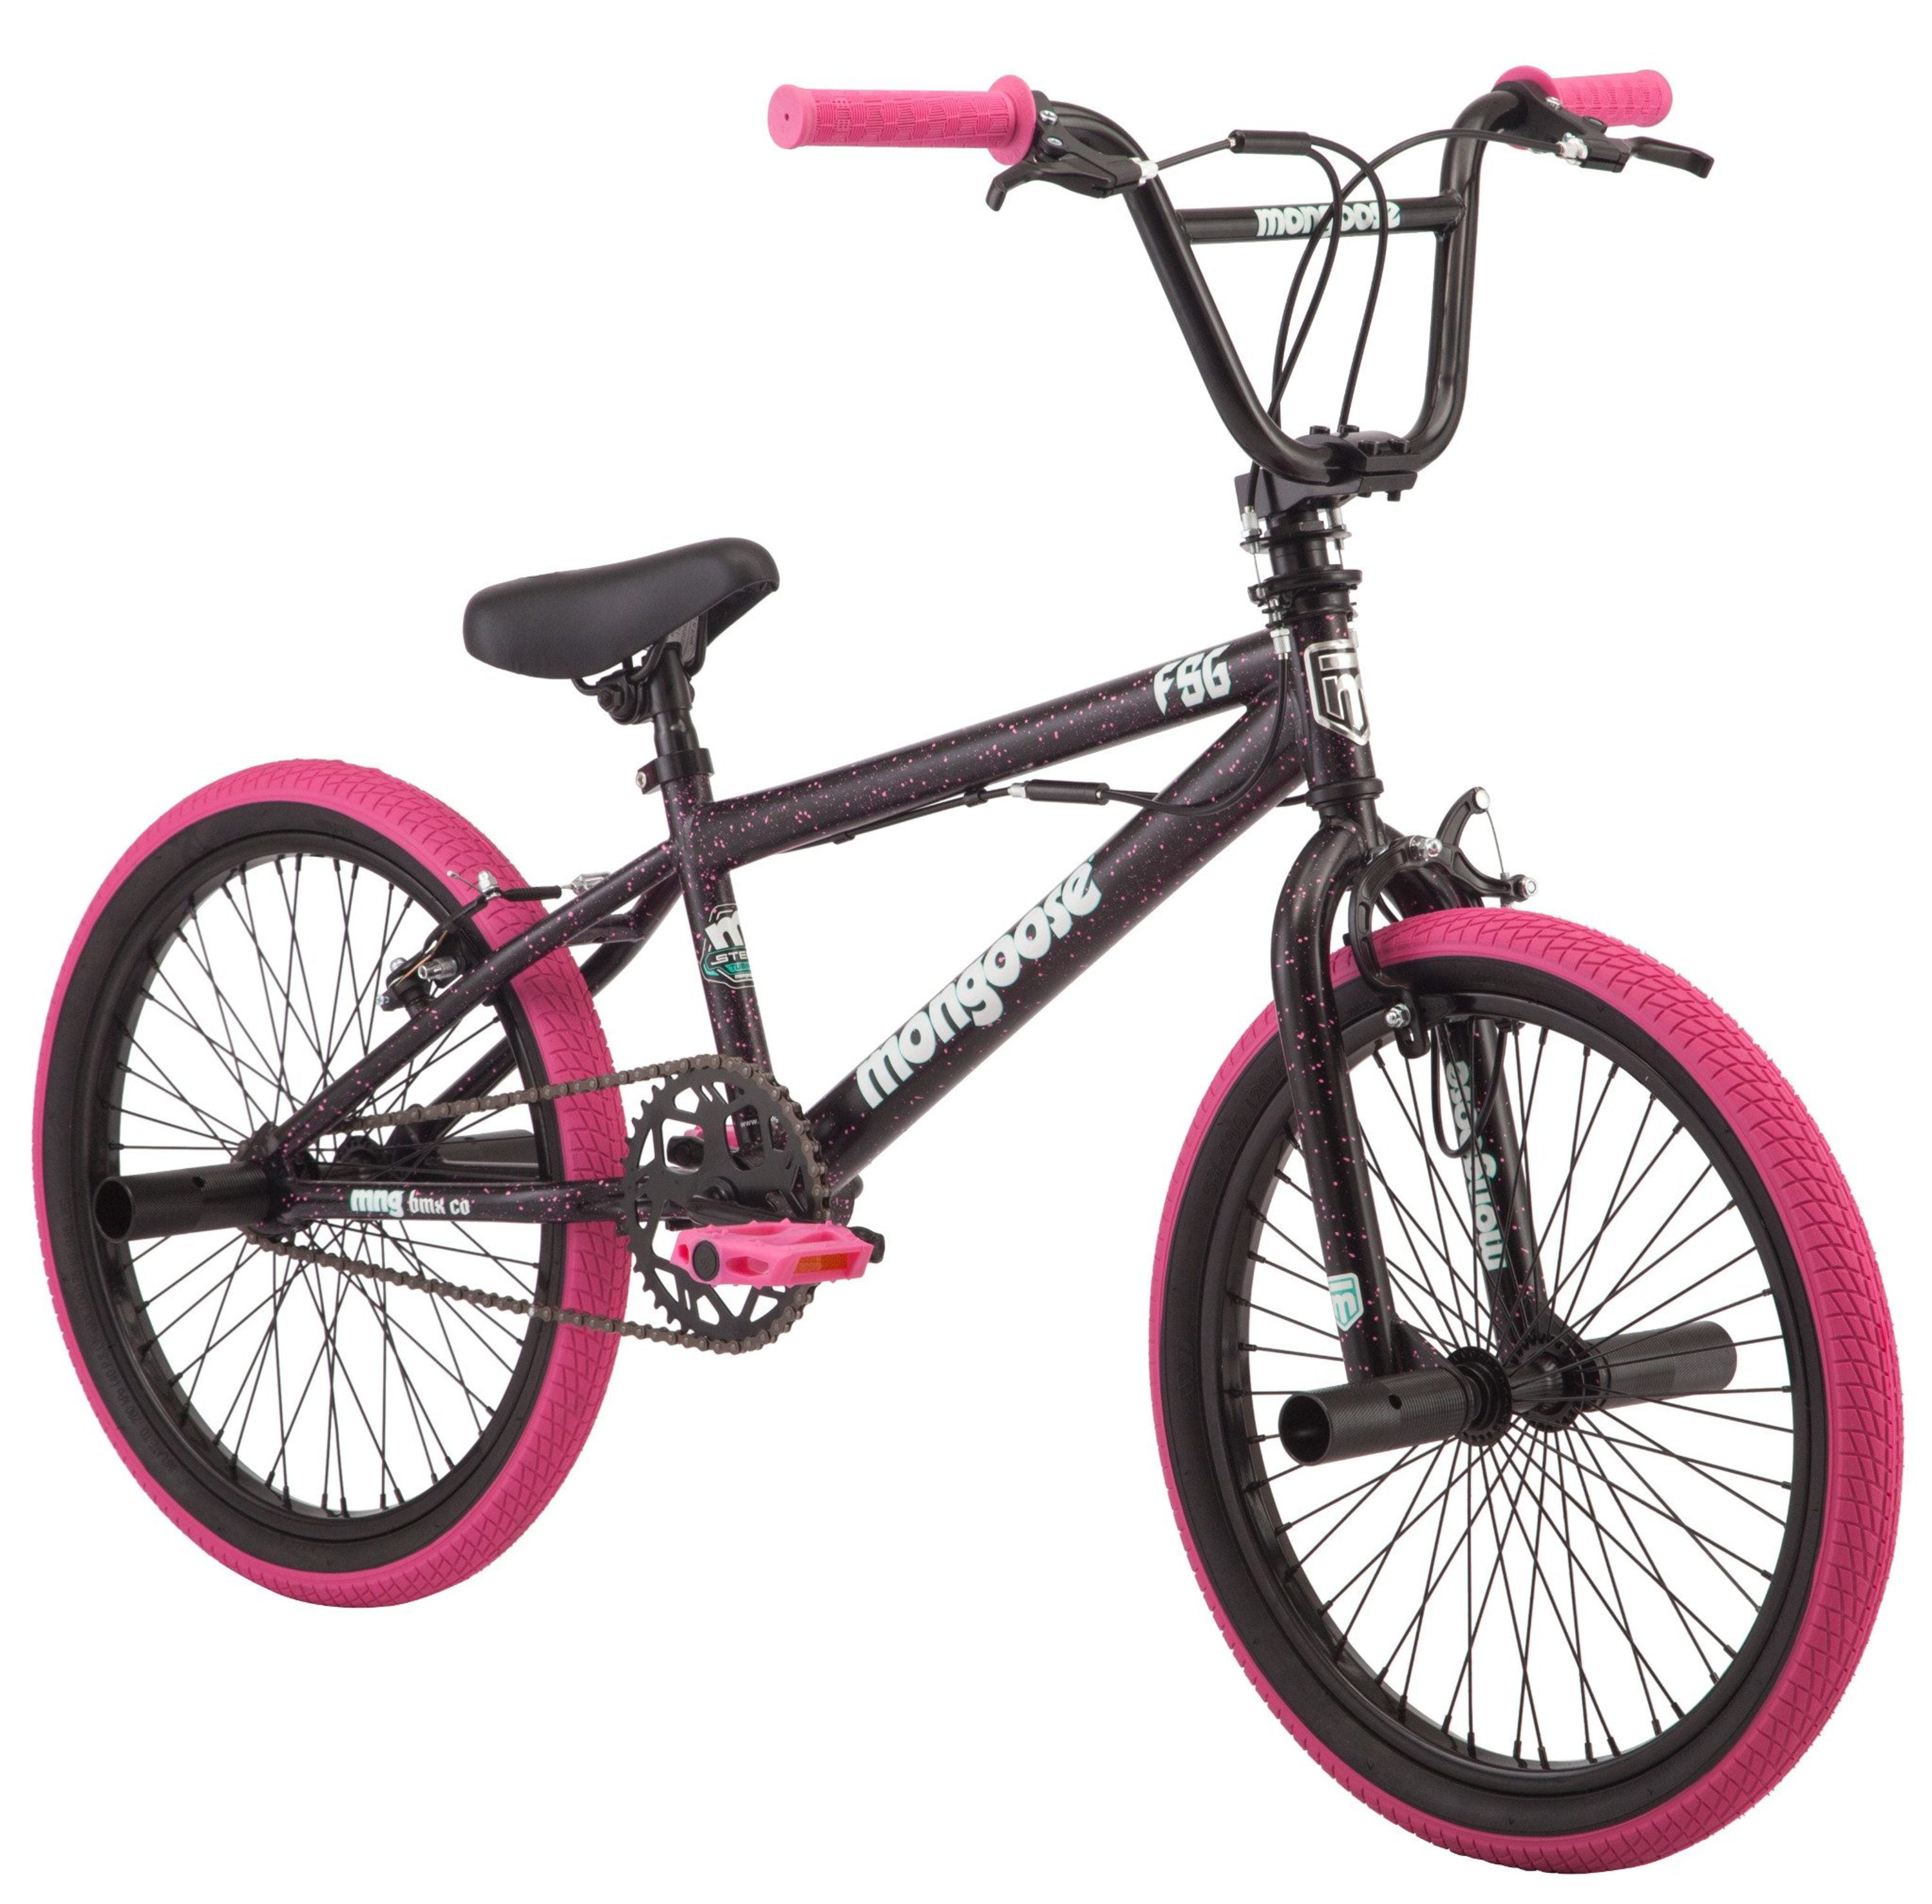 Kent Trouble Maker 18" Wheel BMX Bike Girls 360 Gyro Rotor Stunt Pegs Black/Pink 